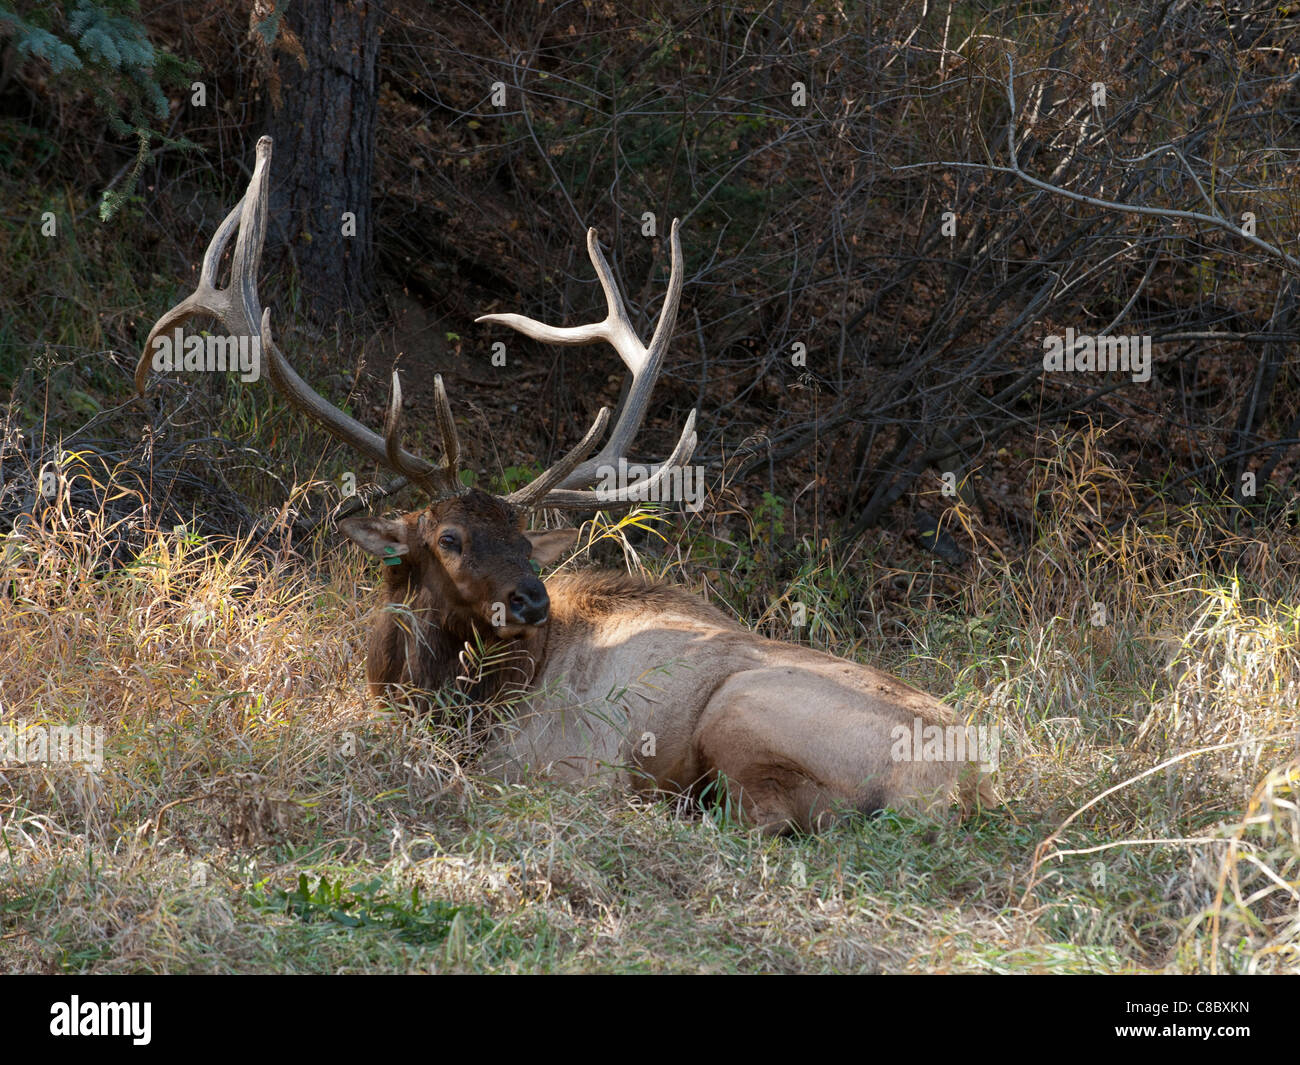 Bull Rocky Mountain Elk Banque D'Images